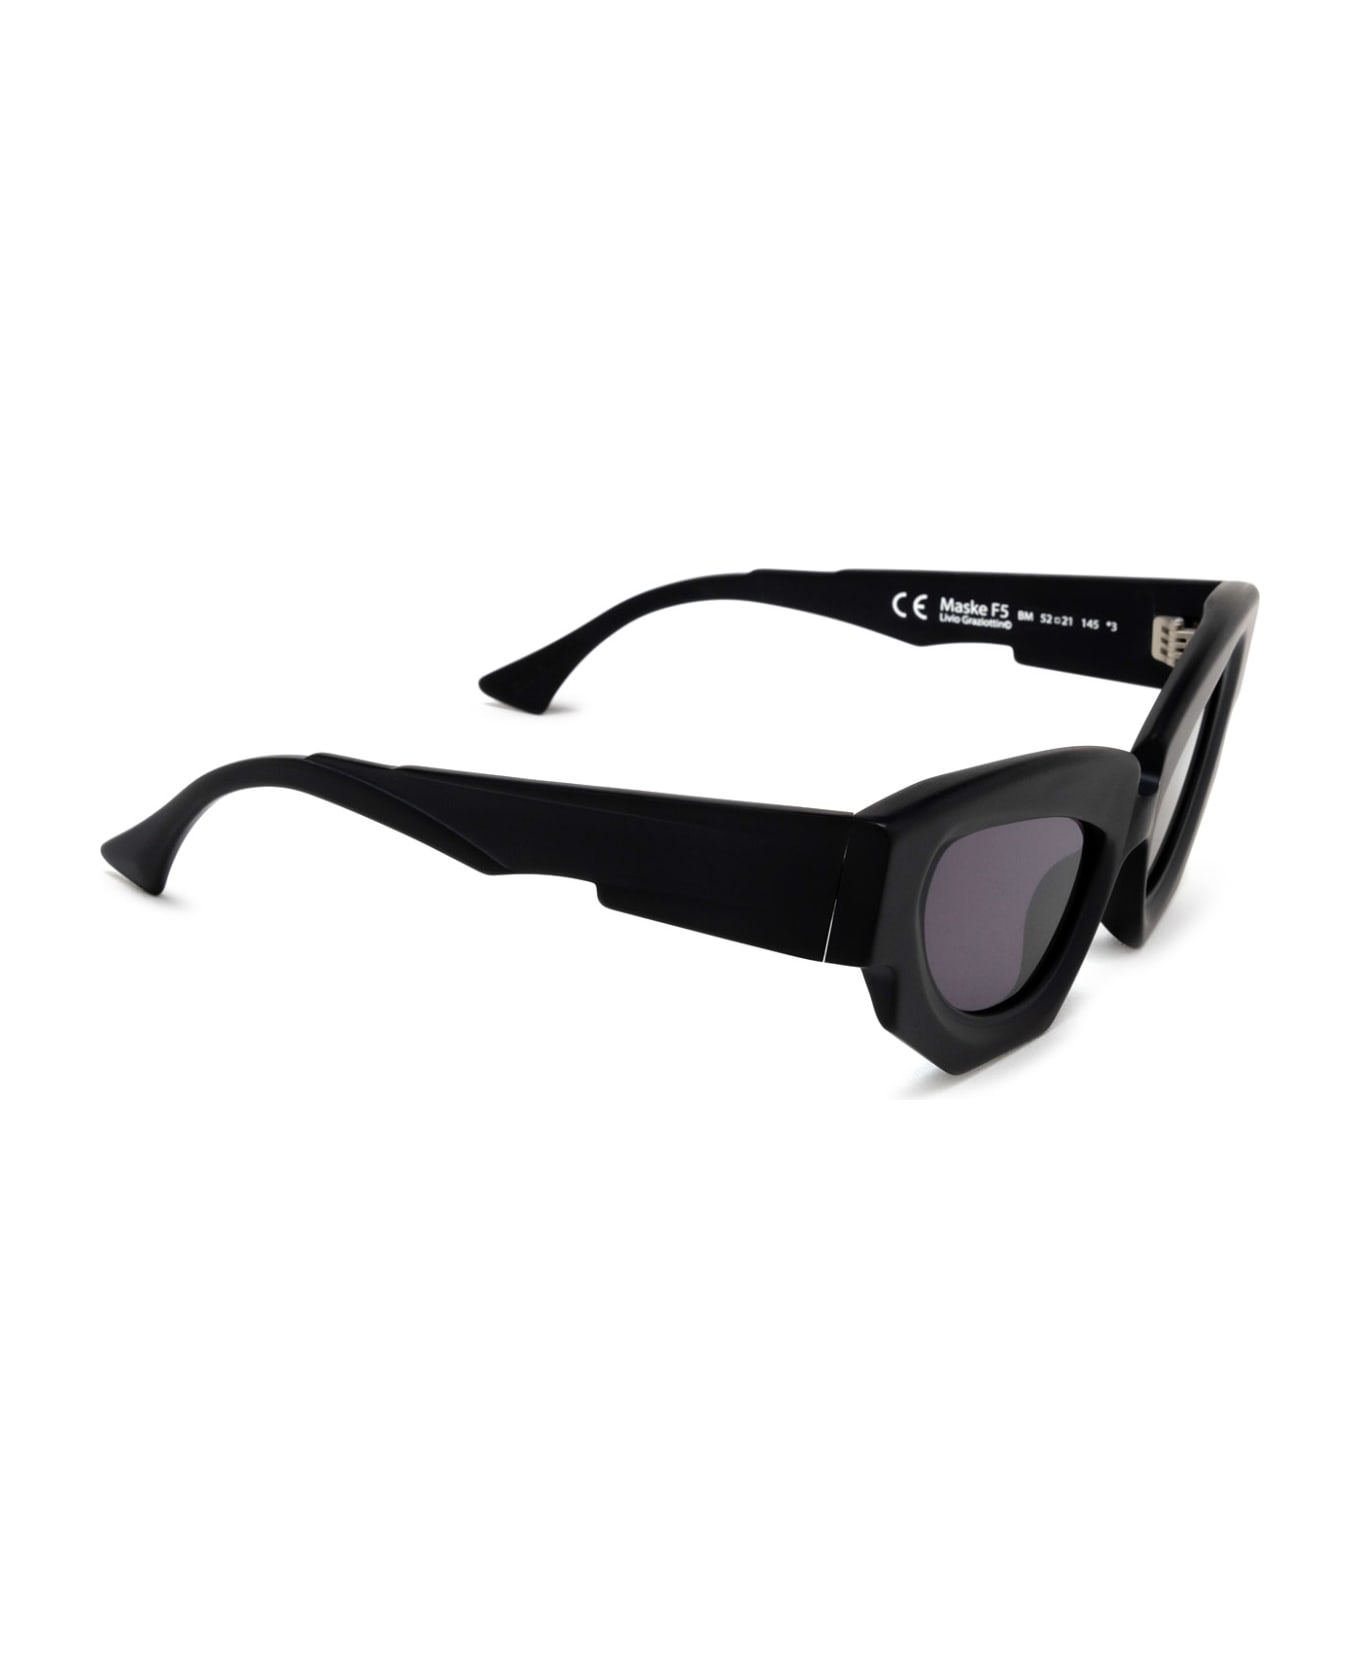 Kuboraum F5 Sun Black Matt Sunglasses - Black Matt